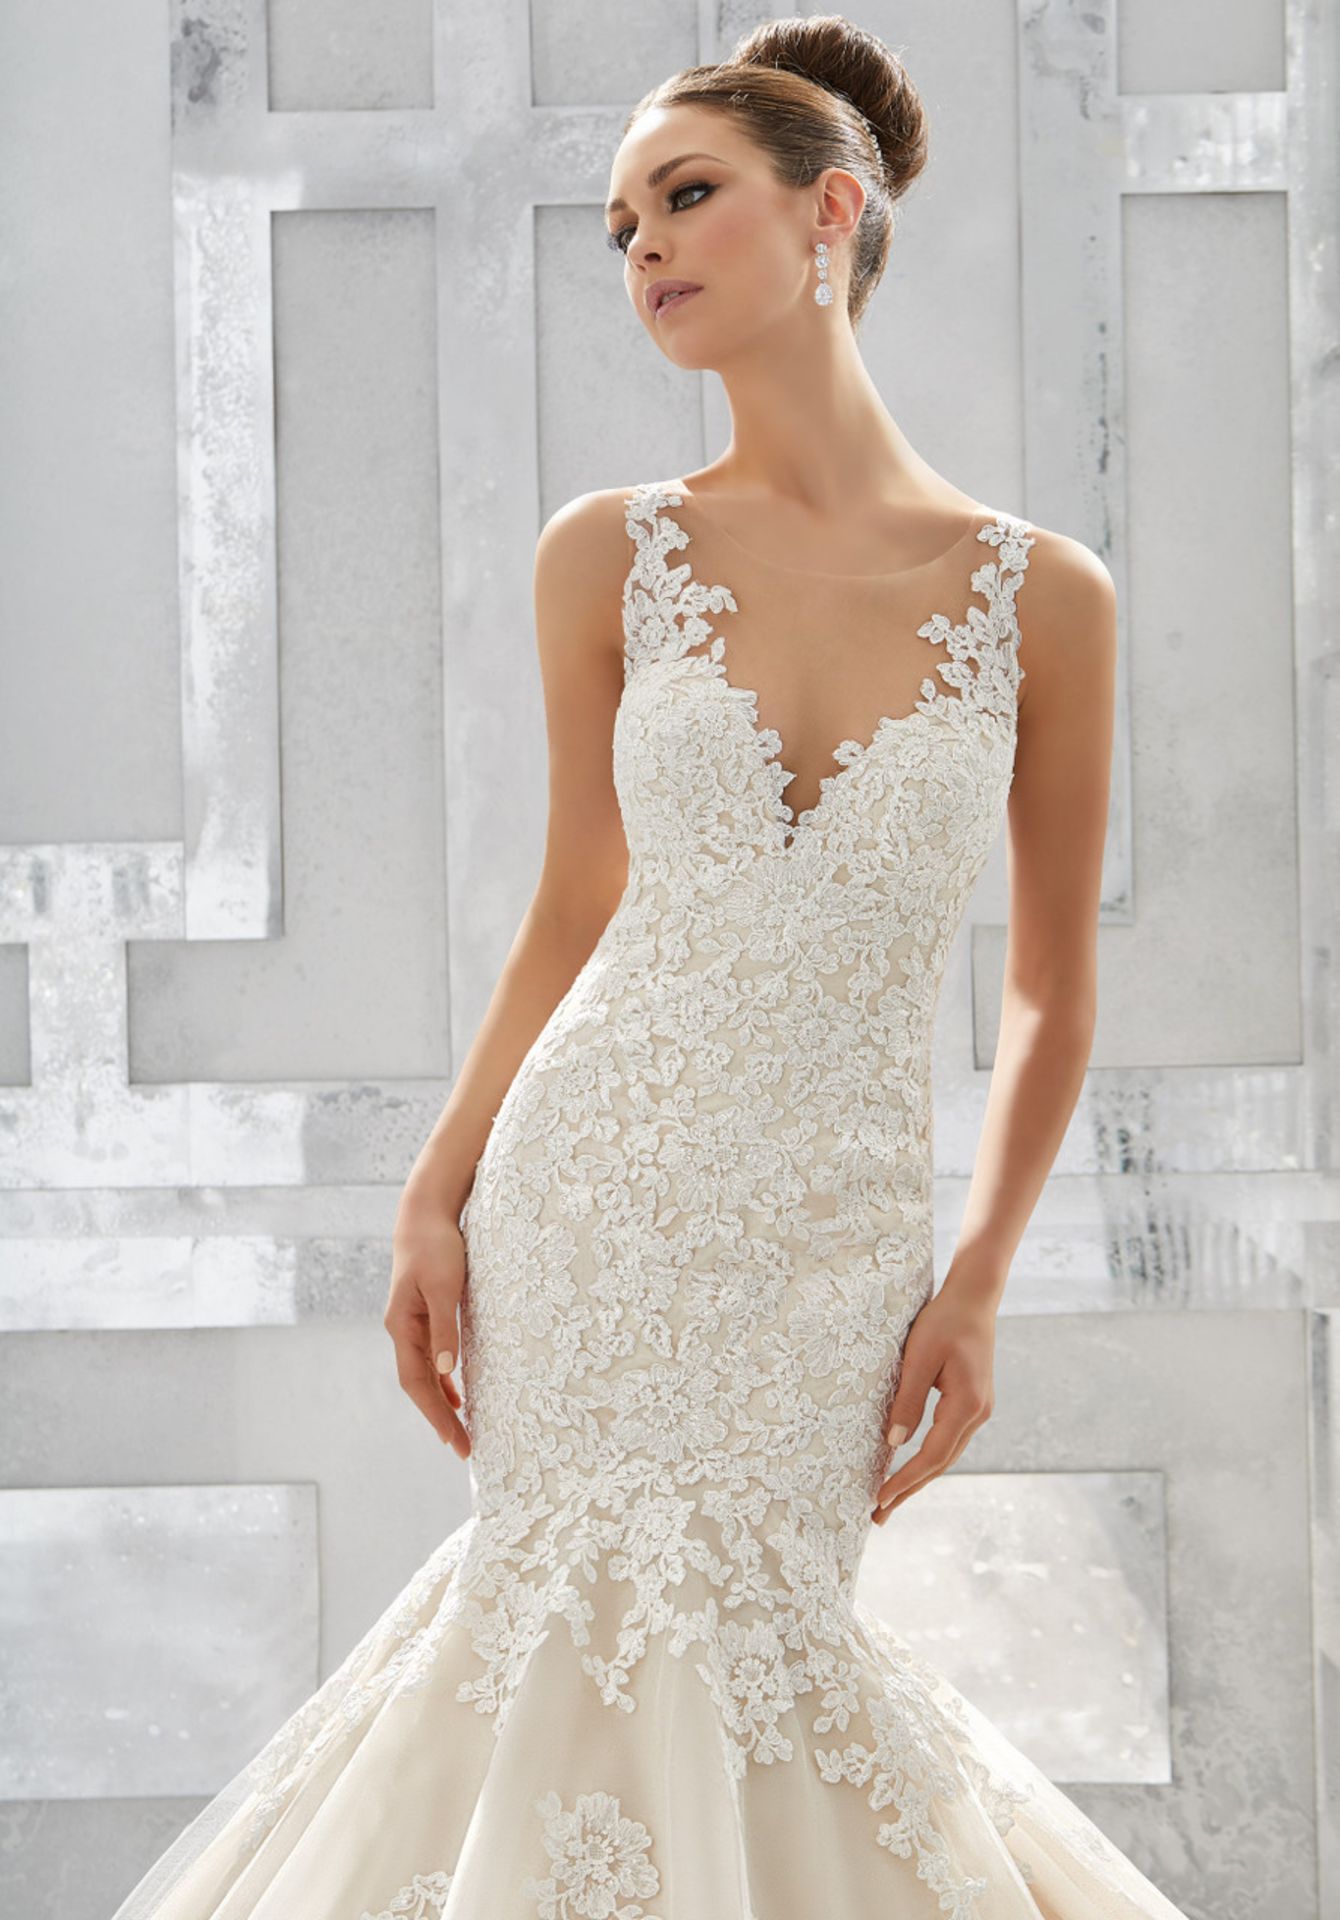 1 x MORI LEE 'Blu' Designer Mermaid Wedding Dress Bridal Gown, With Plunging Illusion V-Neckline - - Image 10 of 21